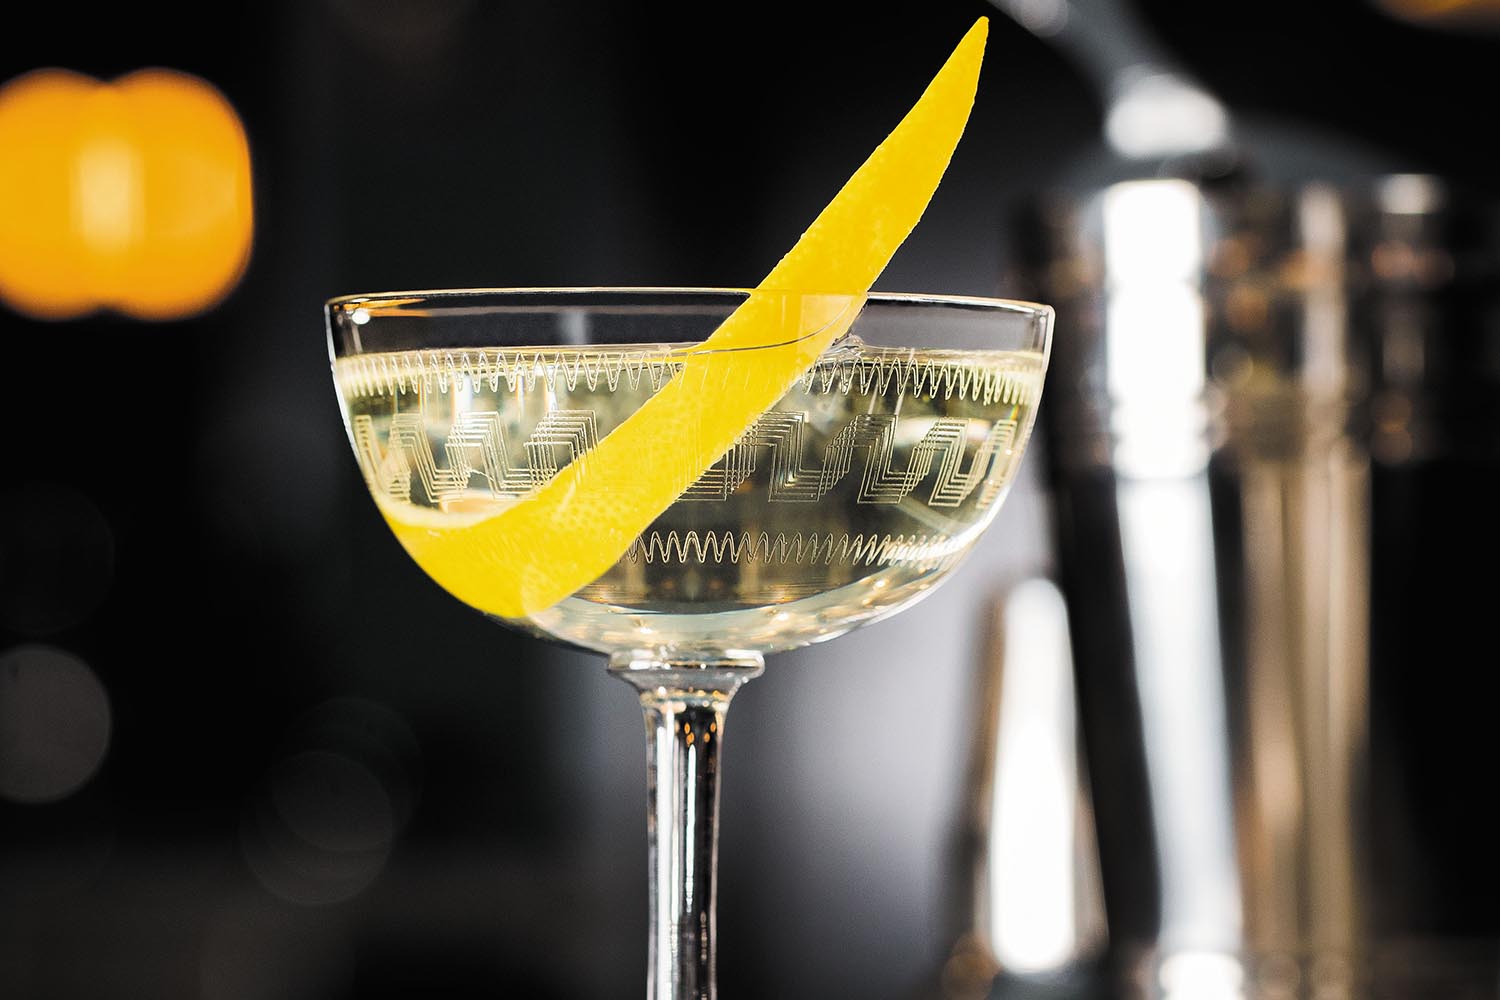 James Bond dry martini